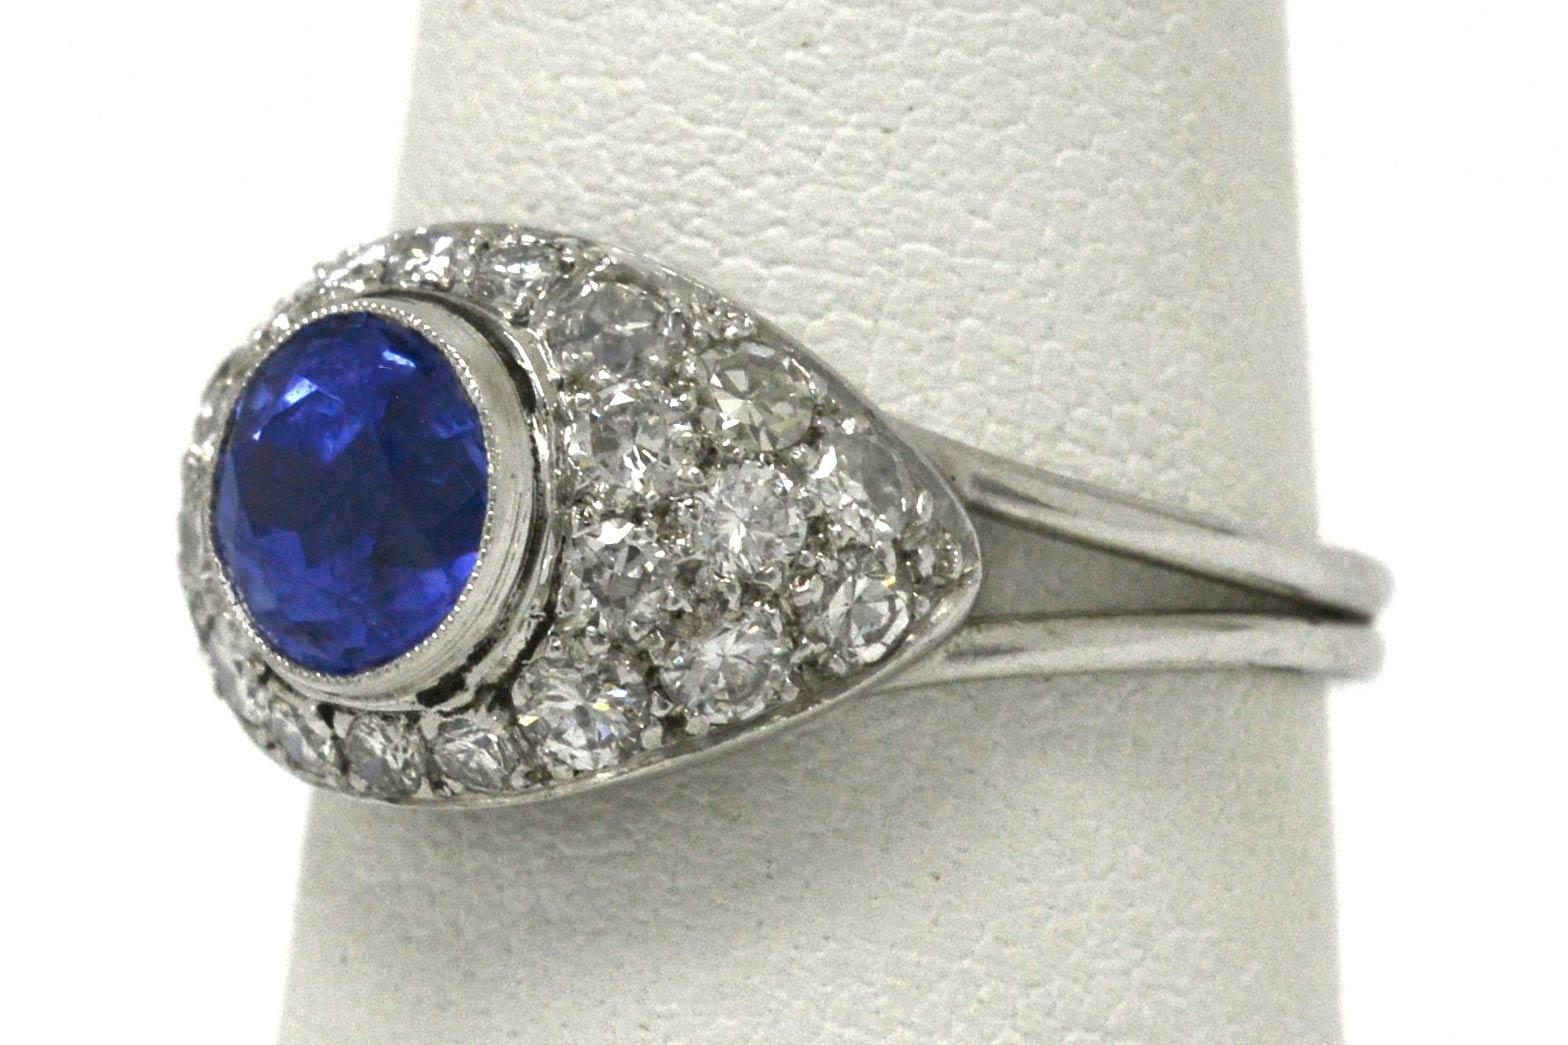 Women's Art Deco Style 1 Carat Blue Sapphire Diamond Engagement Ring Dome Blue Gemstone